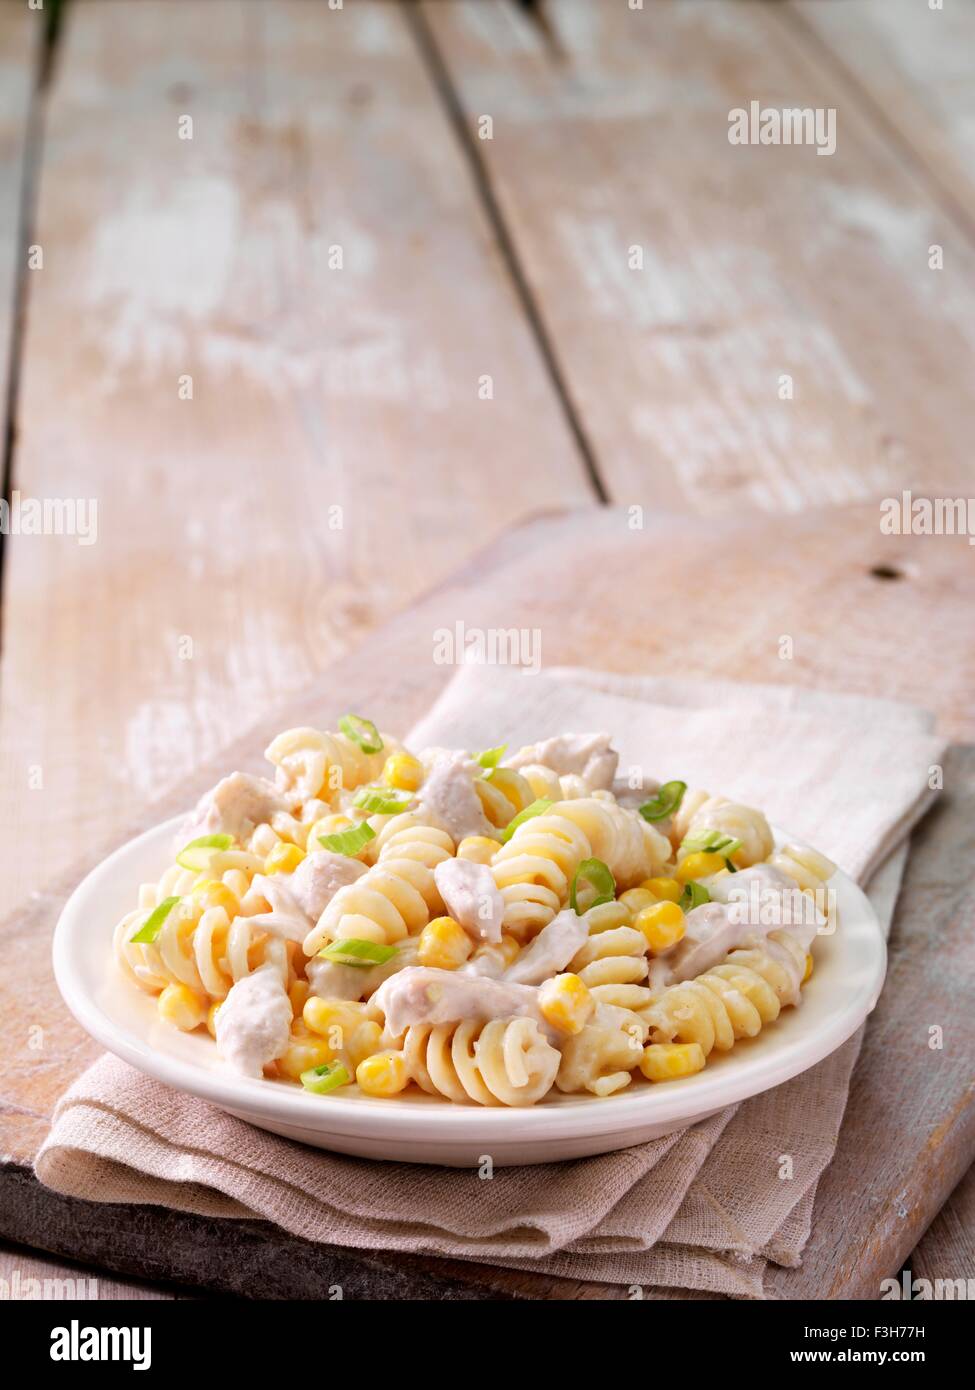 Still life de pollo y maíz dulce pasta con cebolla aderezo en un tazón Foto de stock